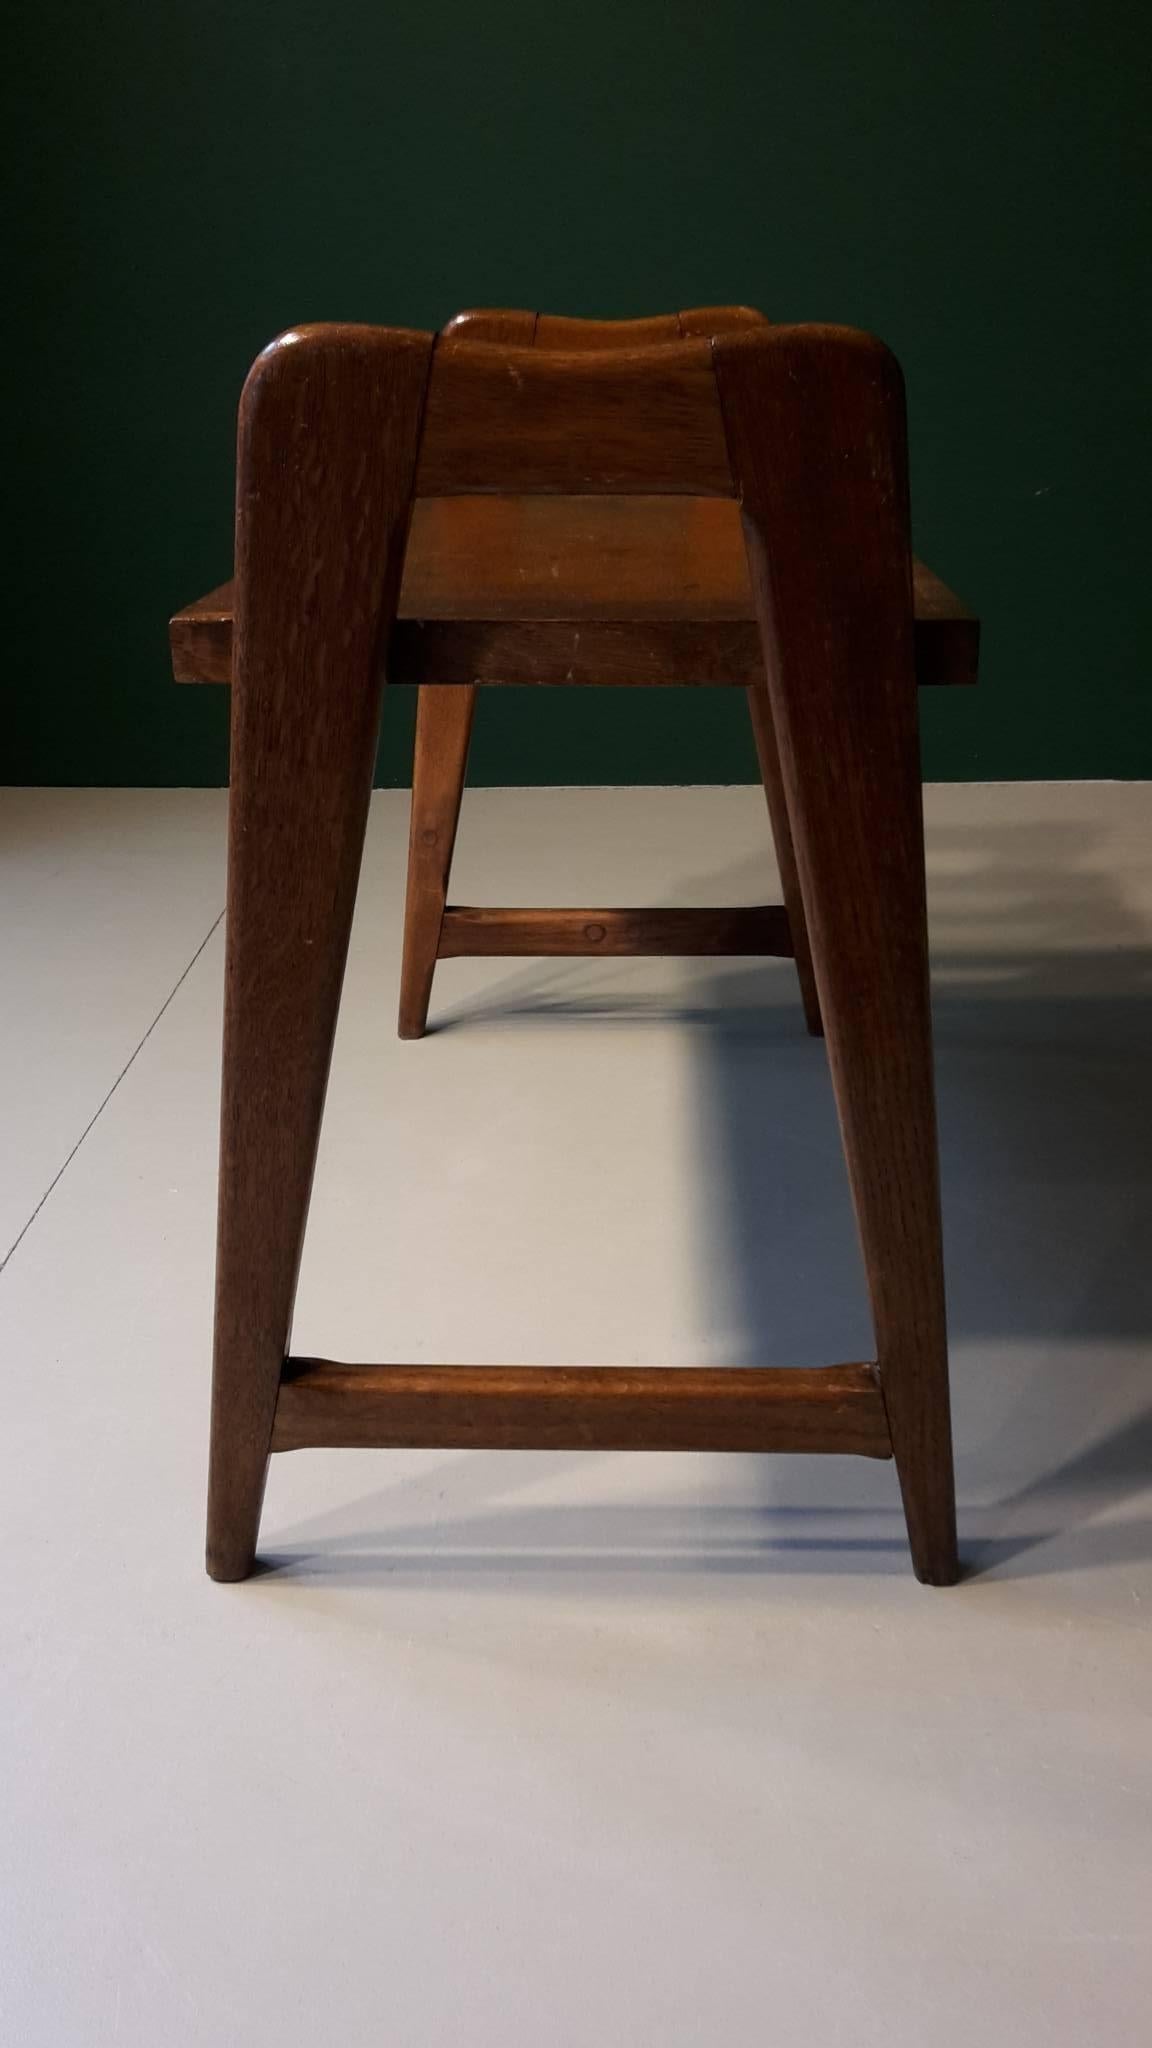 20th century Italian coffee table made of oak, 1950s.